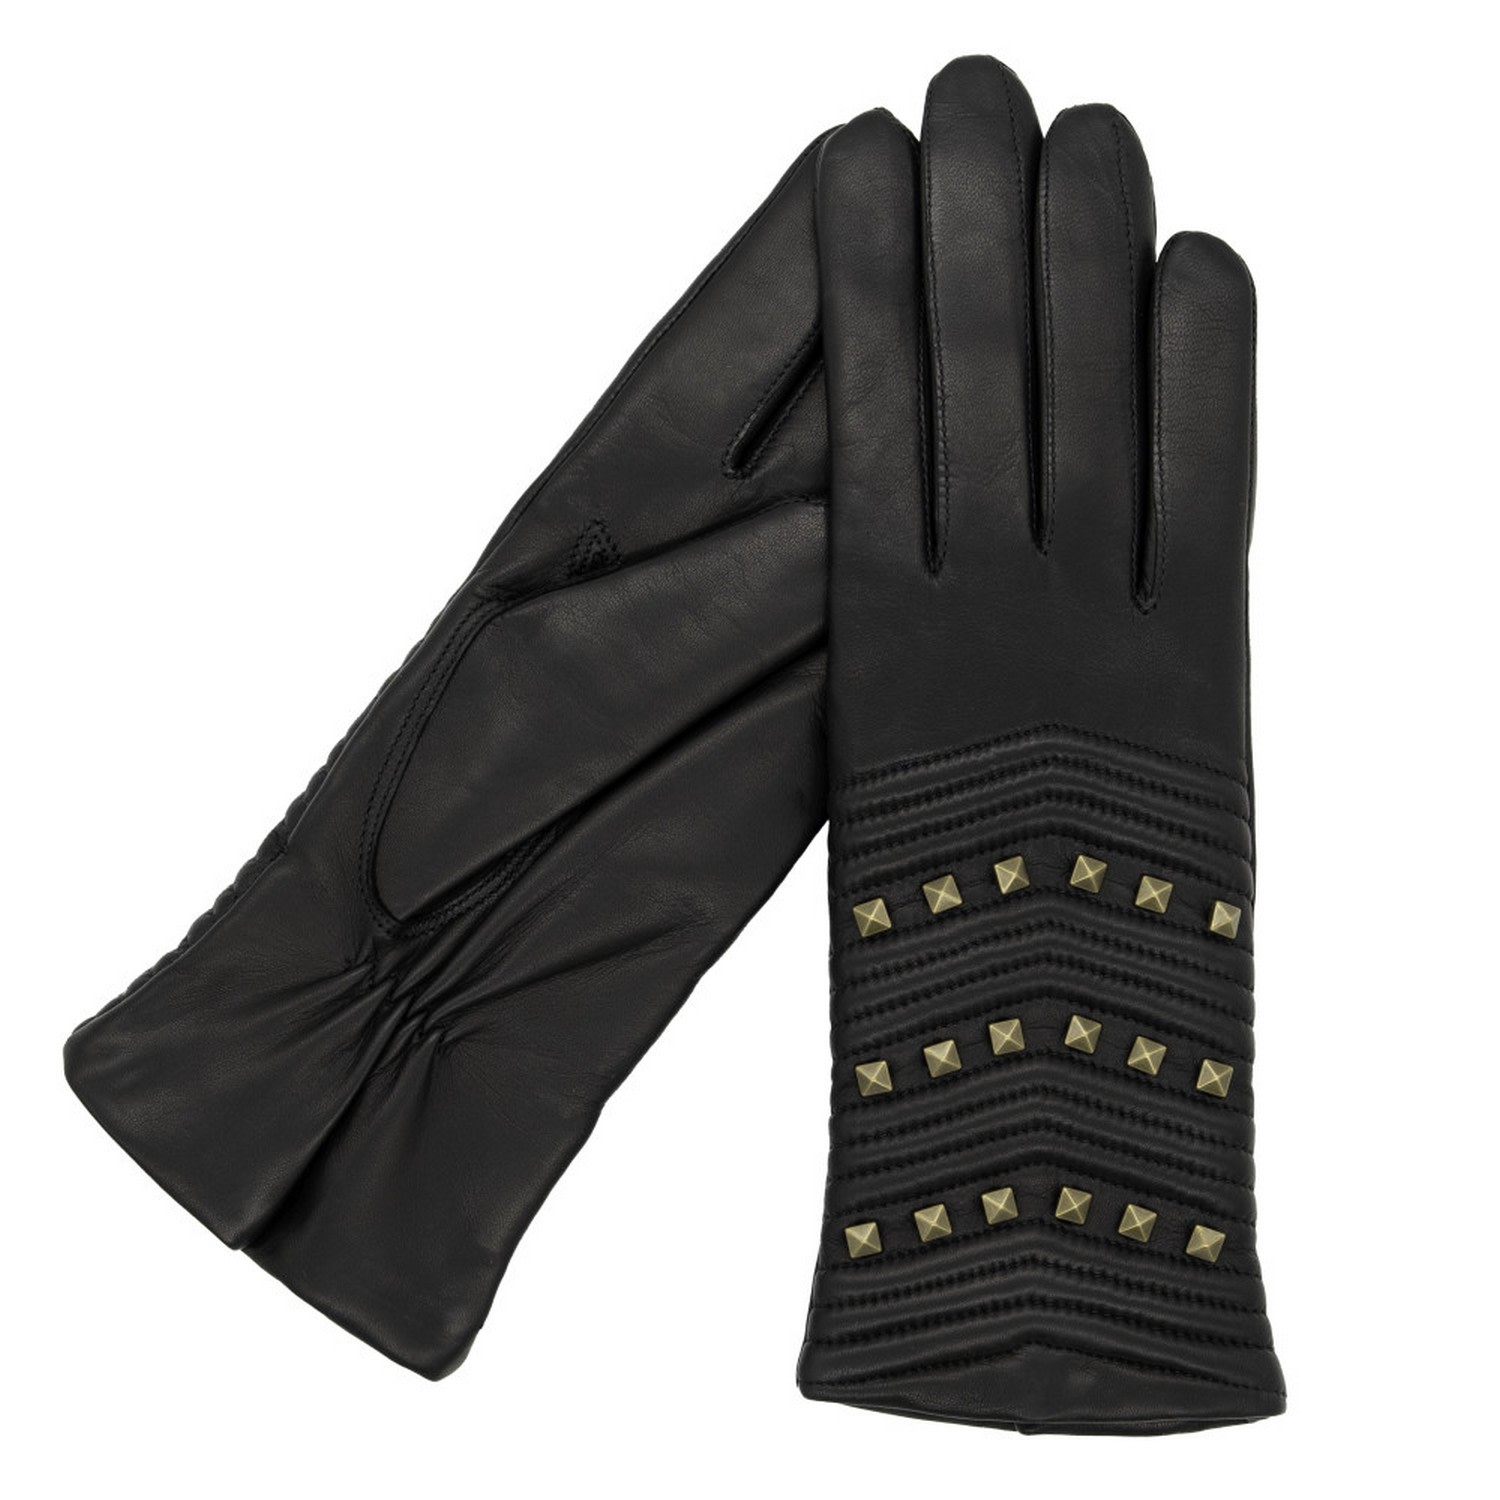 Zoe / Women Leather Gloves - Black 8" Karma Leather Gloves